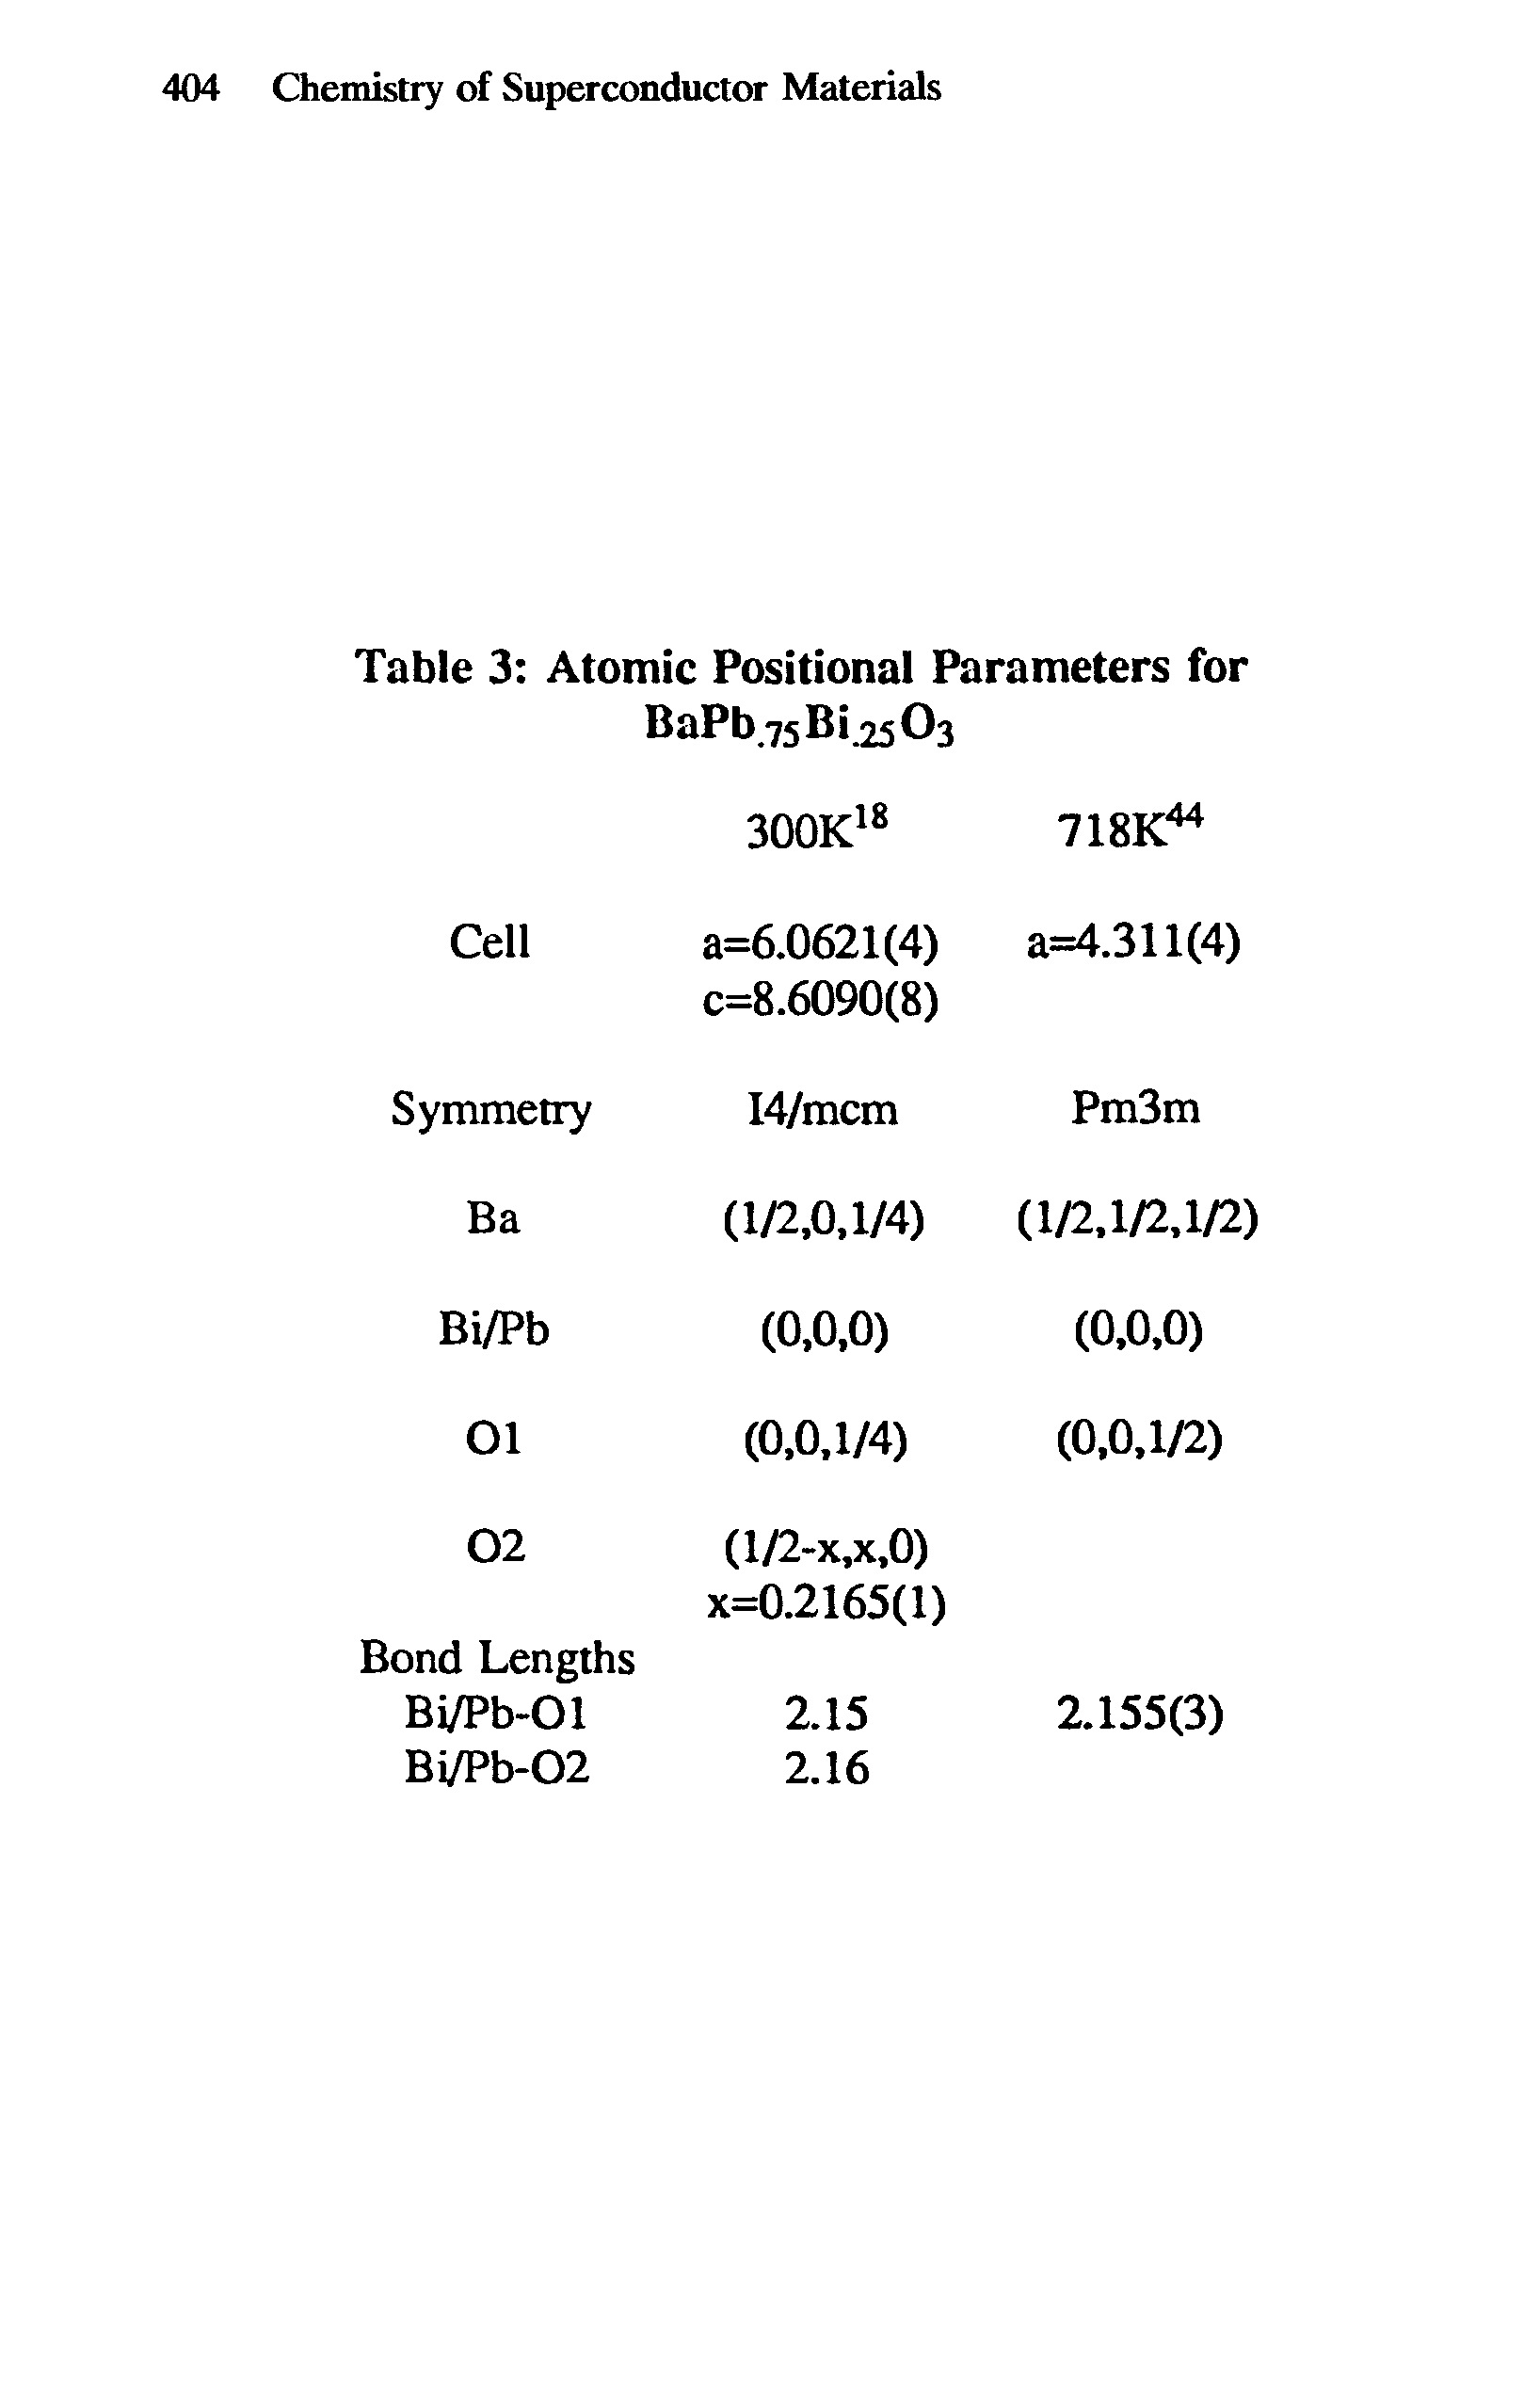 Table 3 Atomic Positional Parameters for BaPbjsBi 25O3...